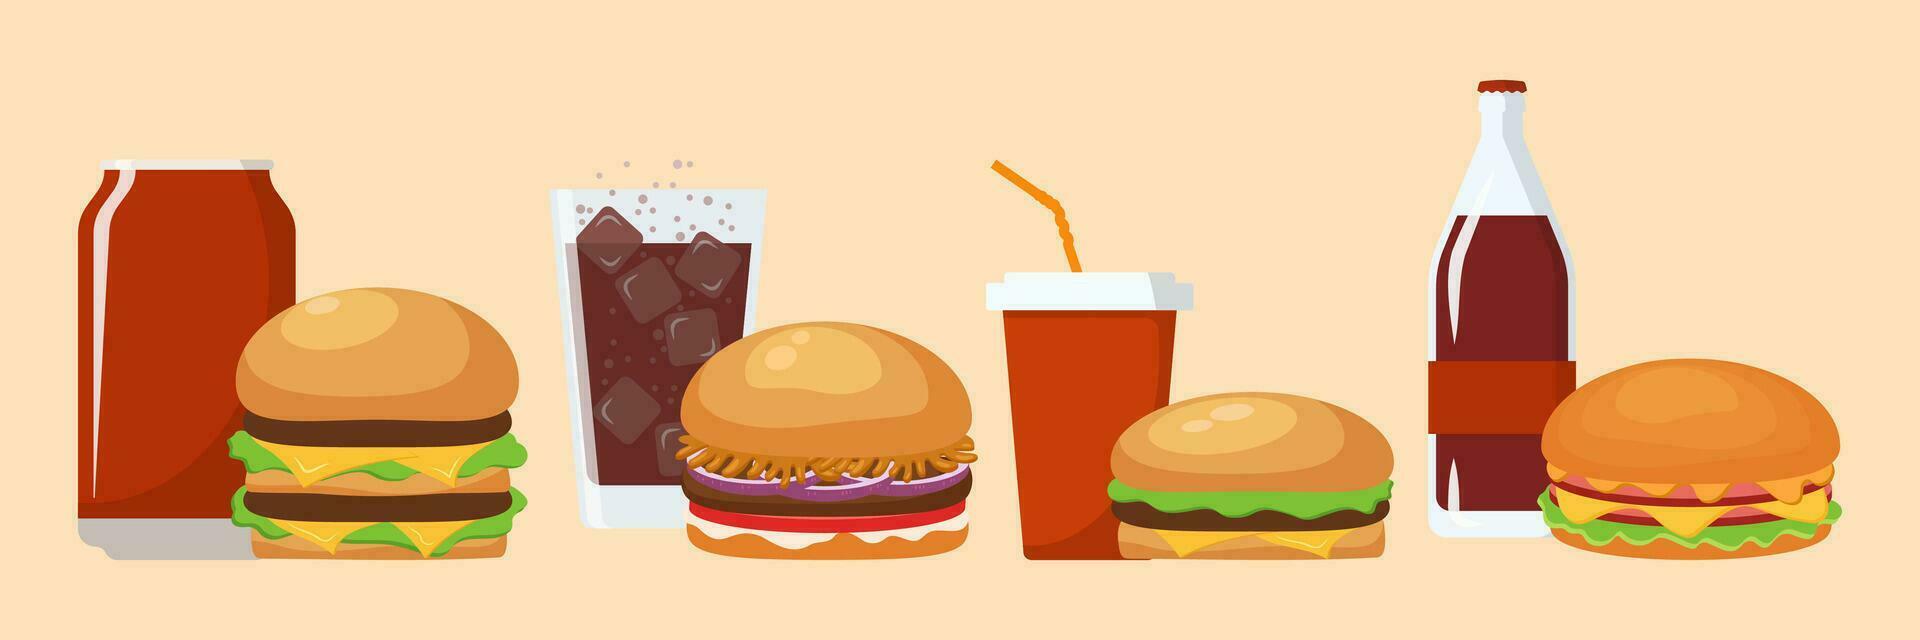 Hamburger and Soda, cold drink or coffee. Vector illustration set.